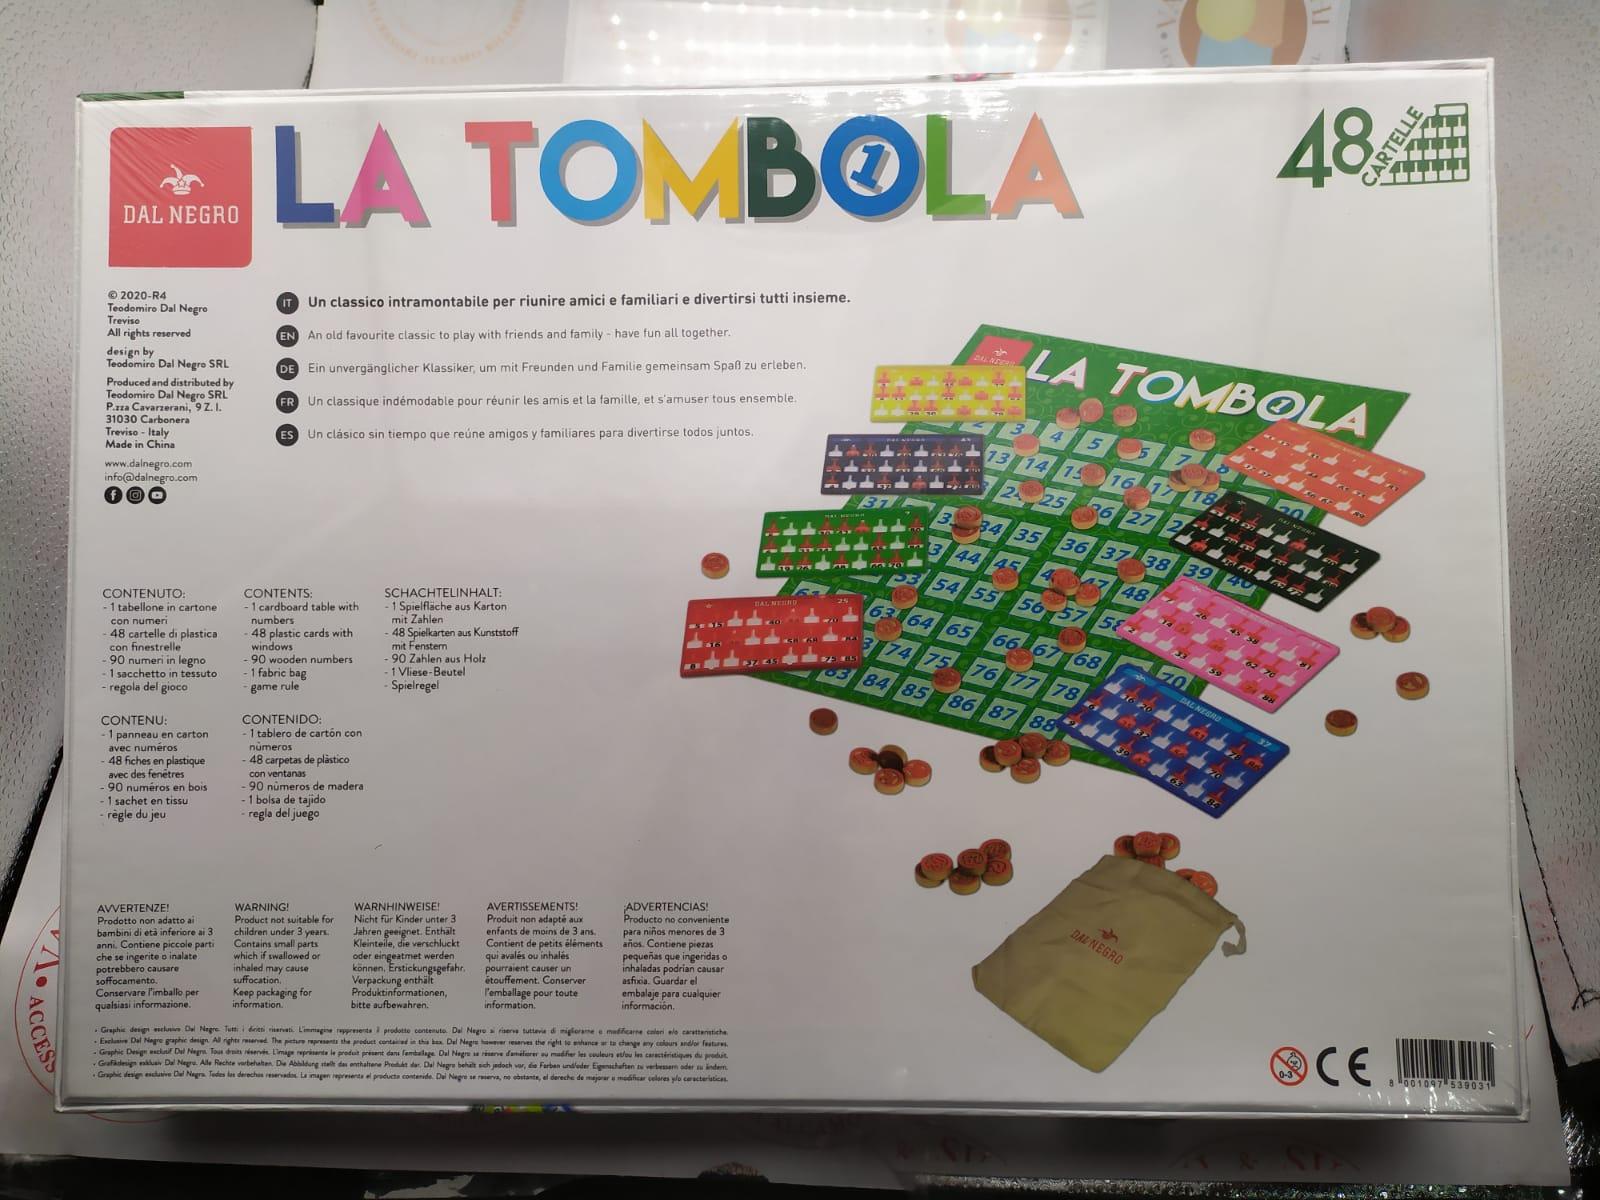 Tombola Classica - Dal Negro